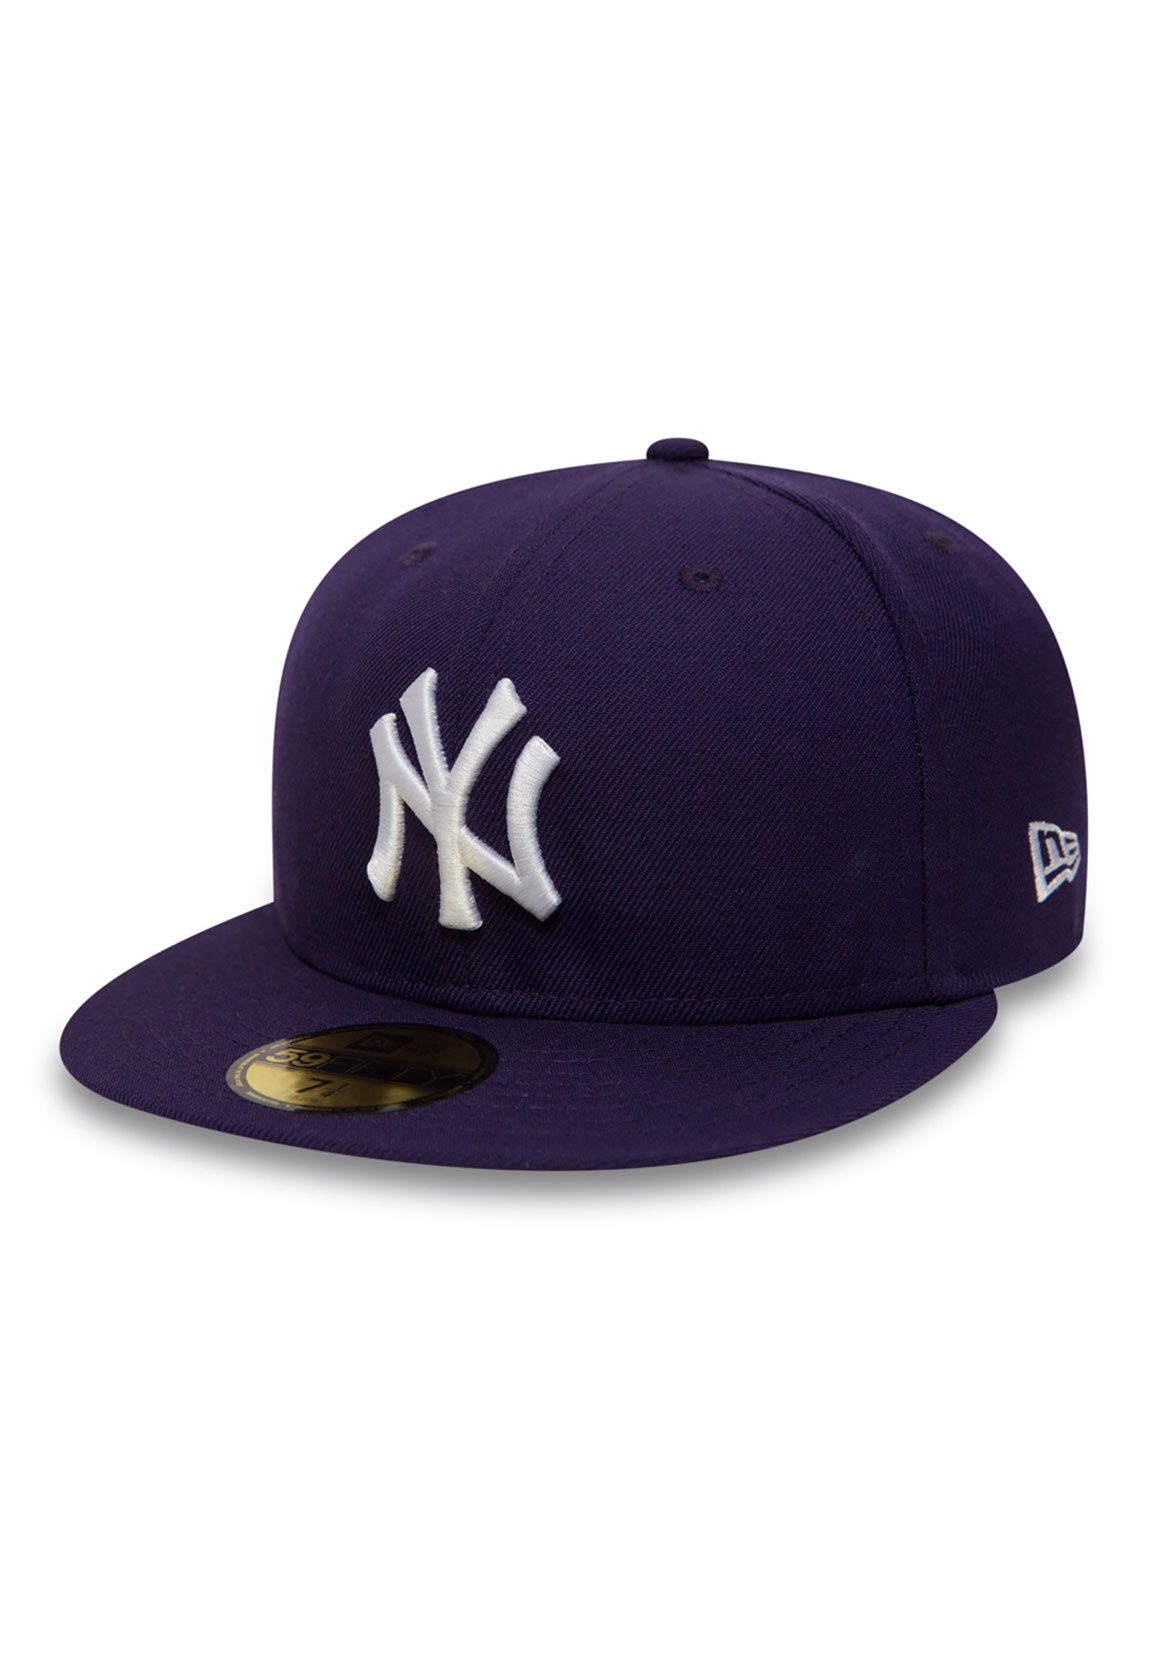 59Fifty Era Purple Fitted New Lila Cap New NY Cap YANKEES Era